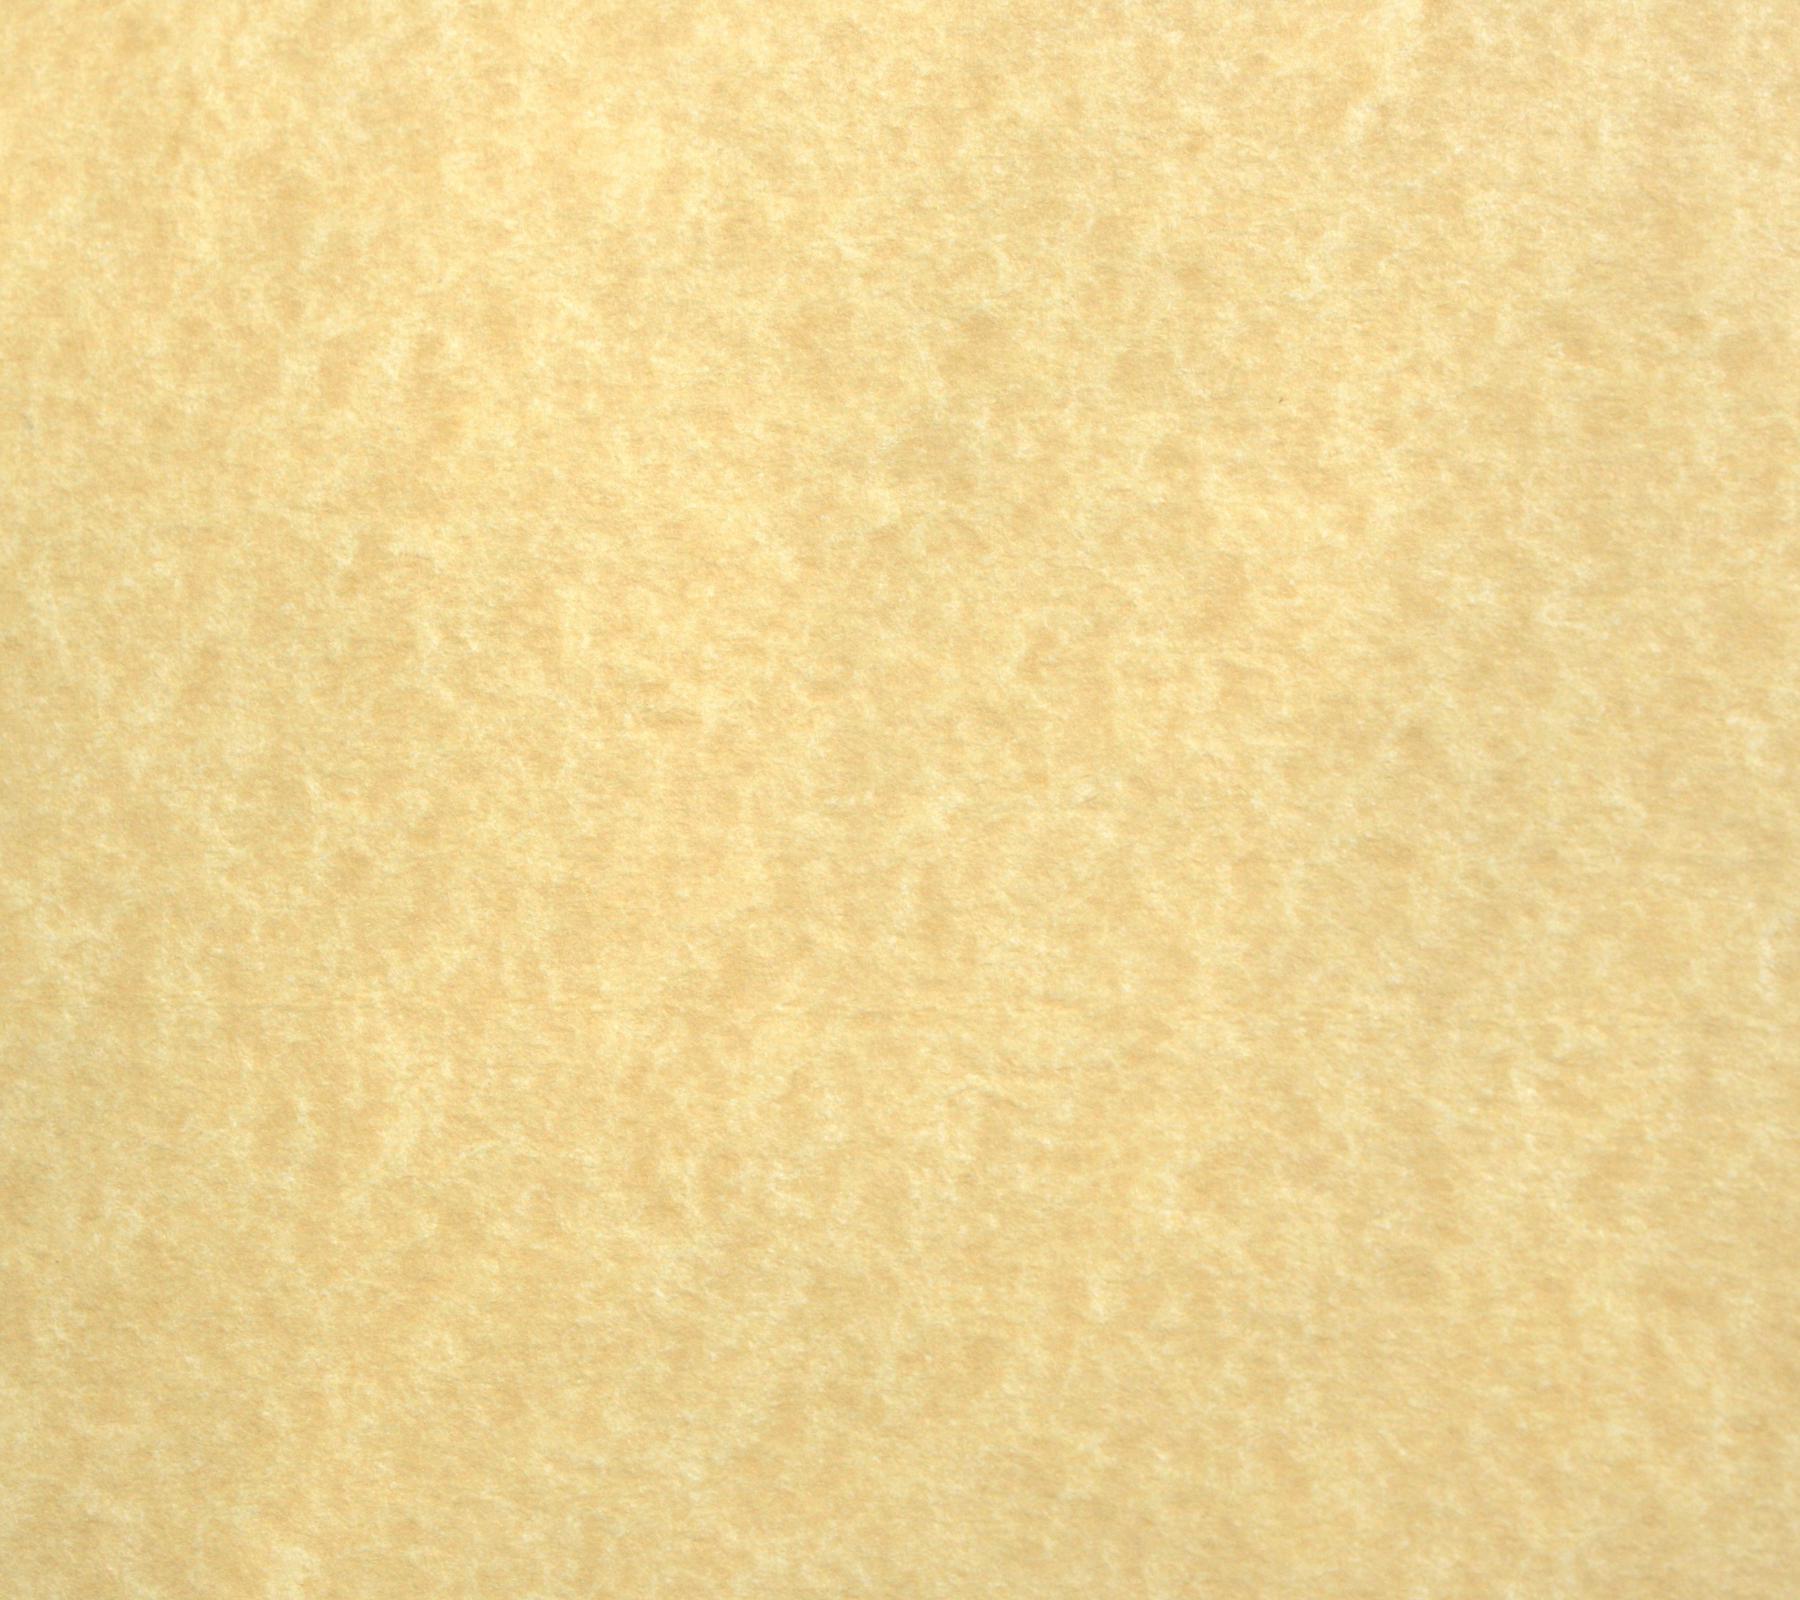 Parchment Paper Background Wallpaper Picture HD